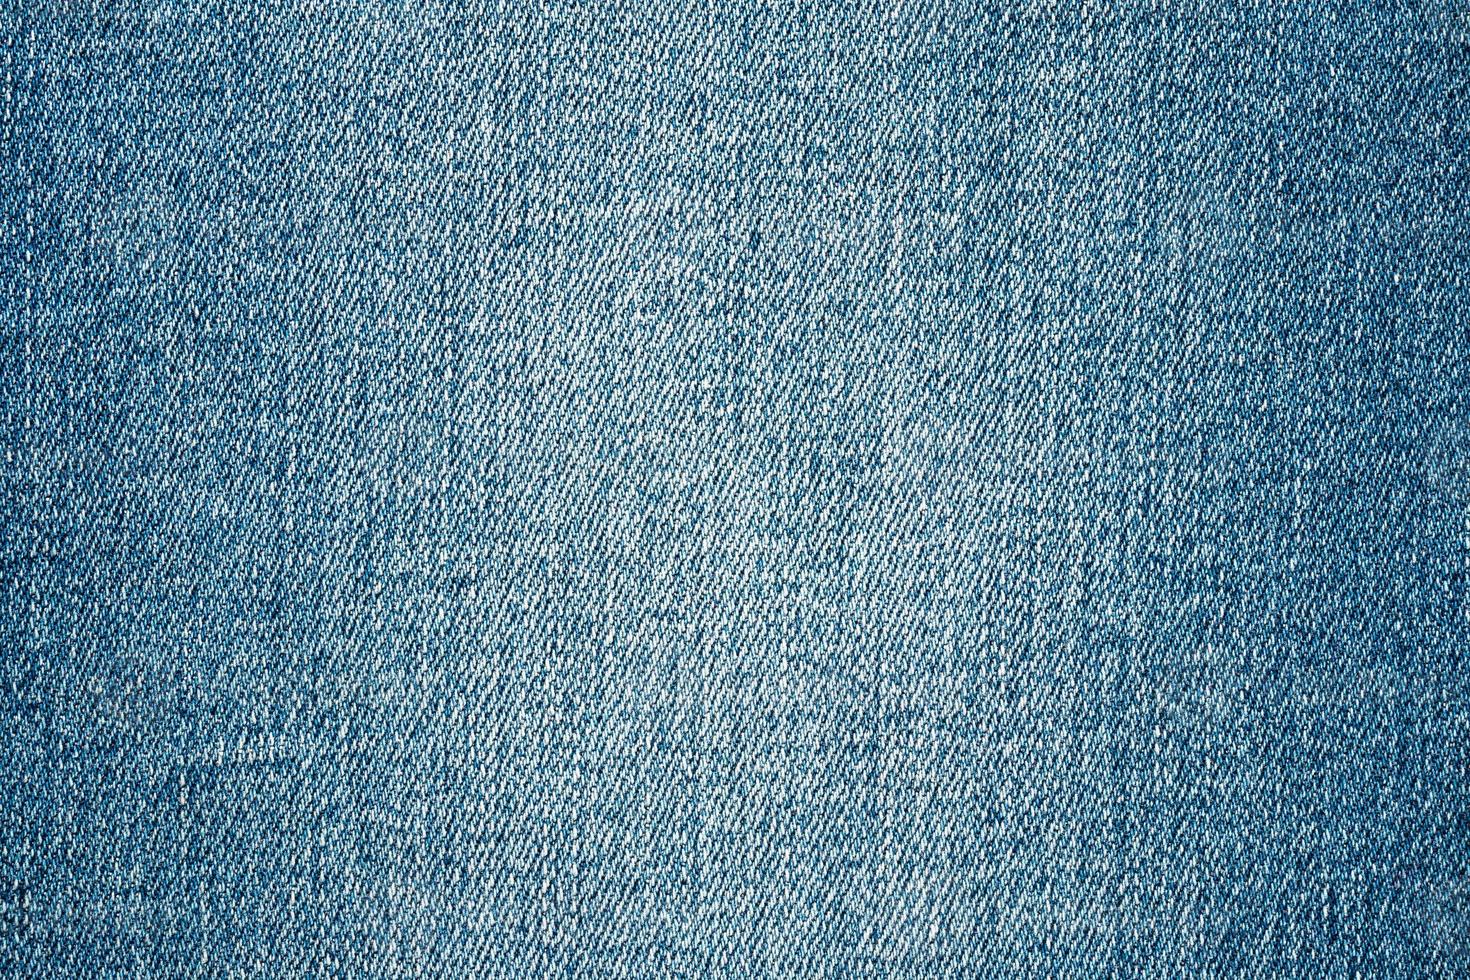 denim blauw jeans structuur dichtbij omhoog achtergrond top visie foto